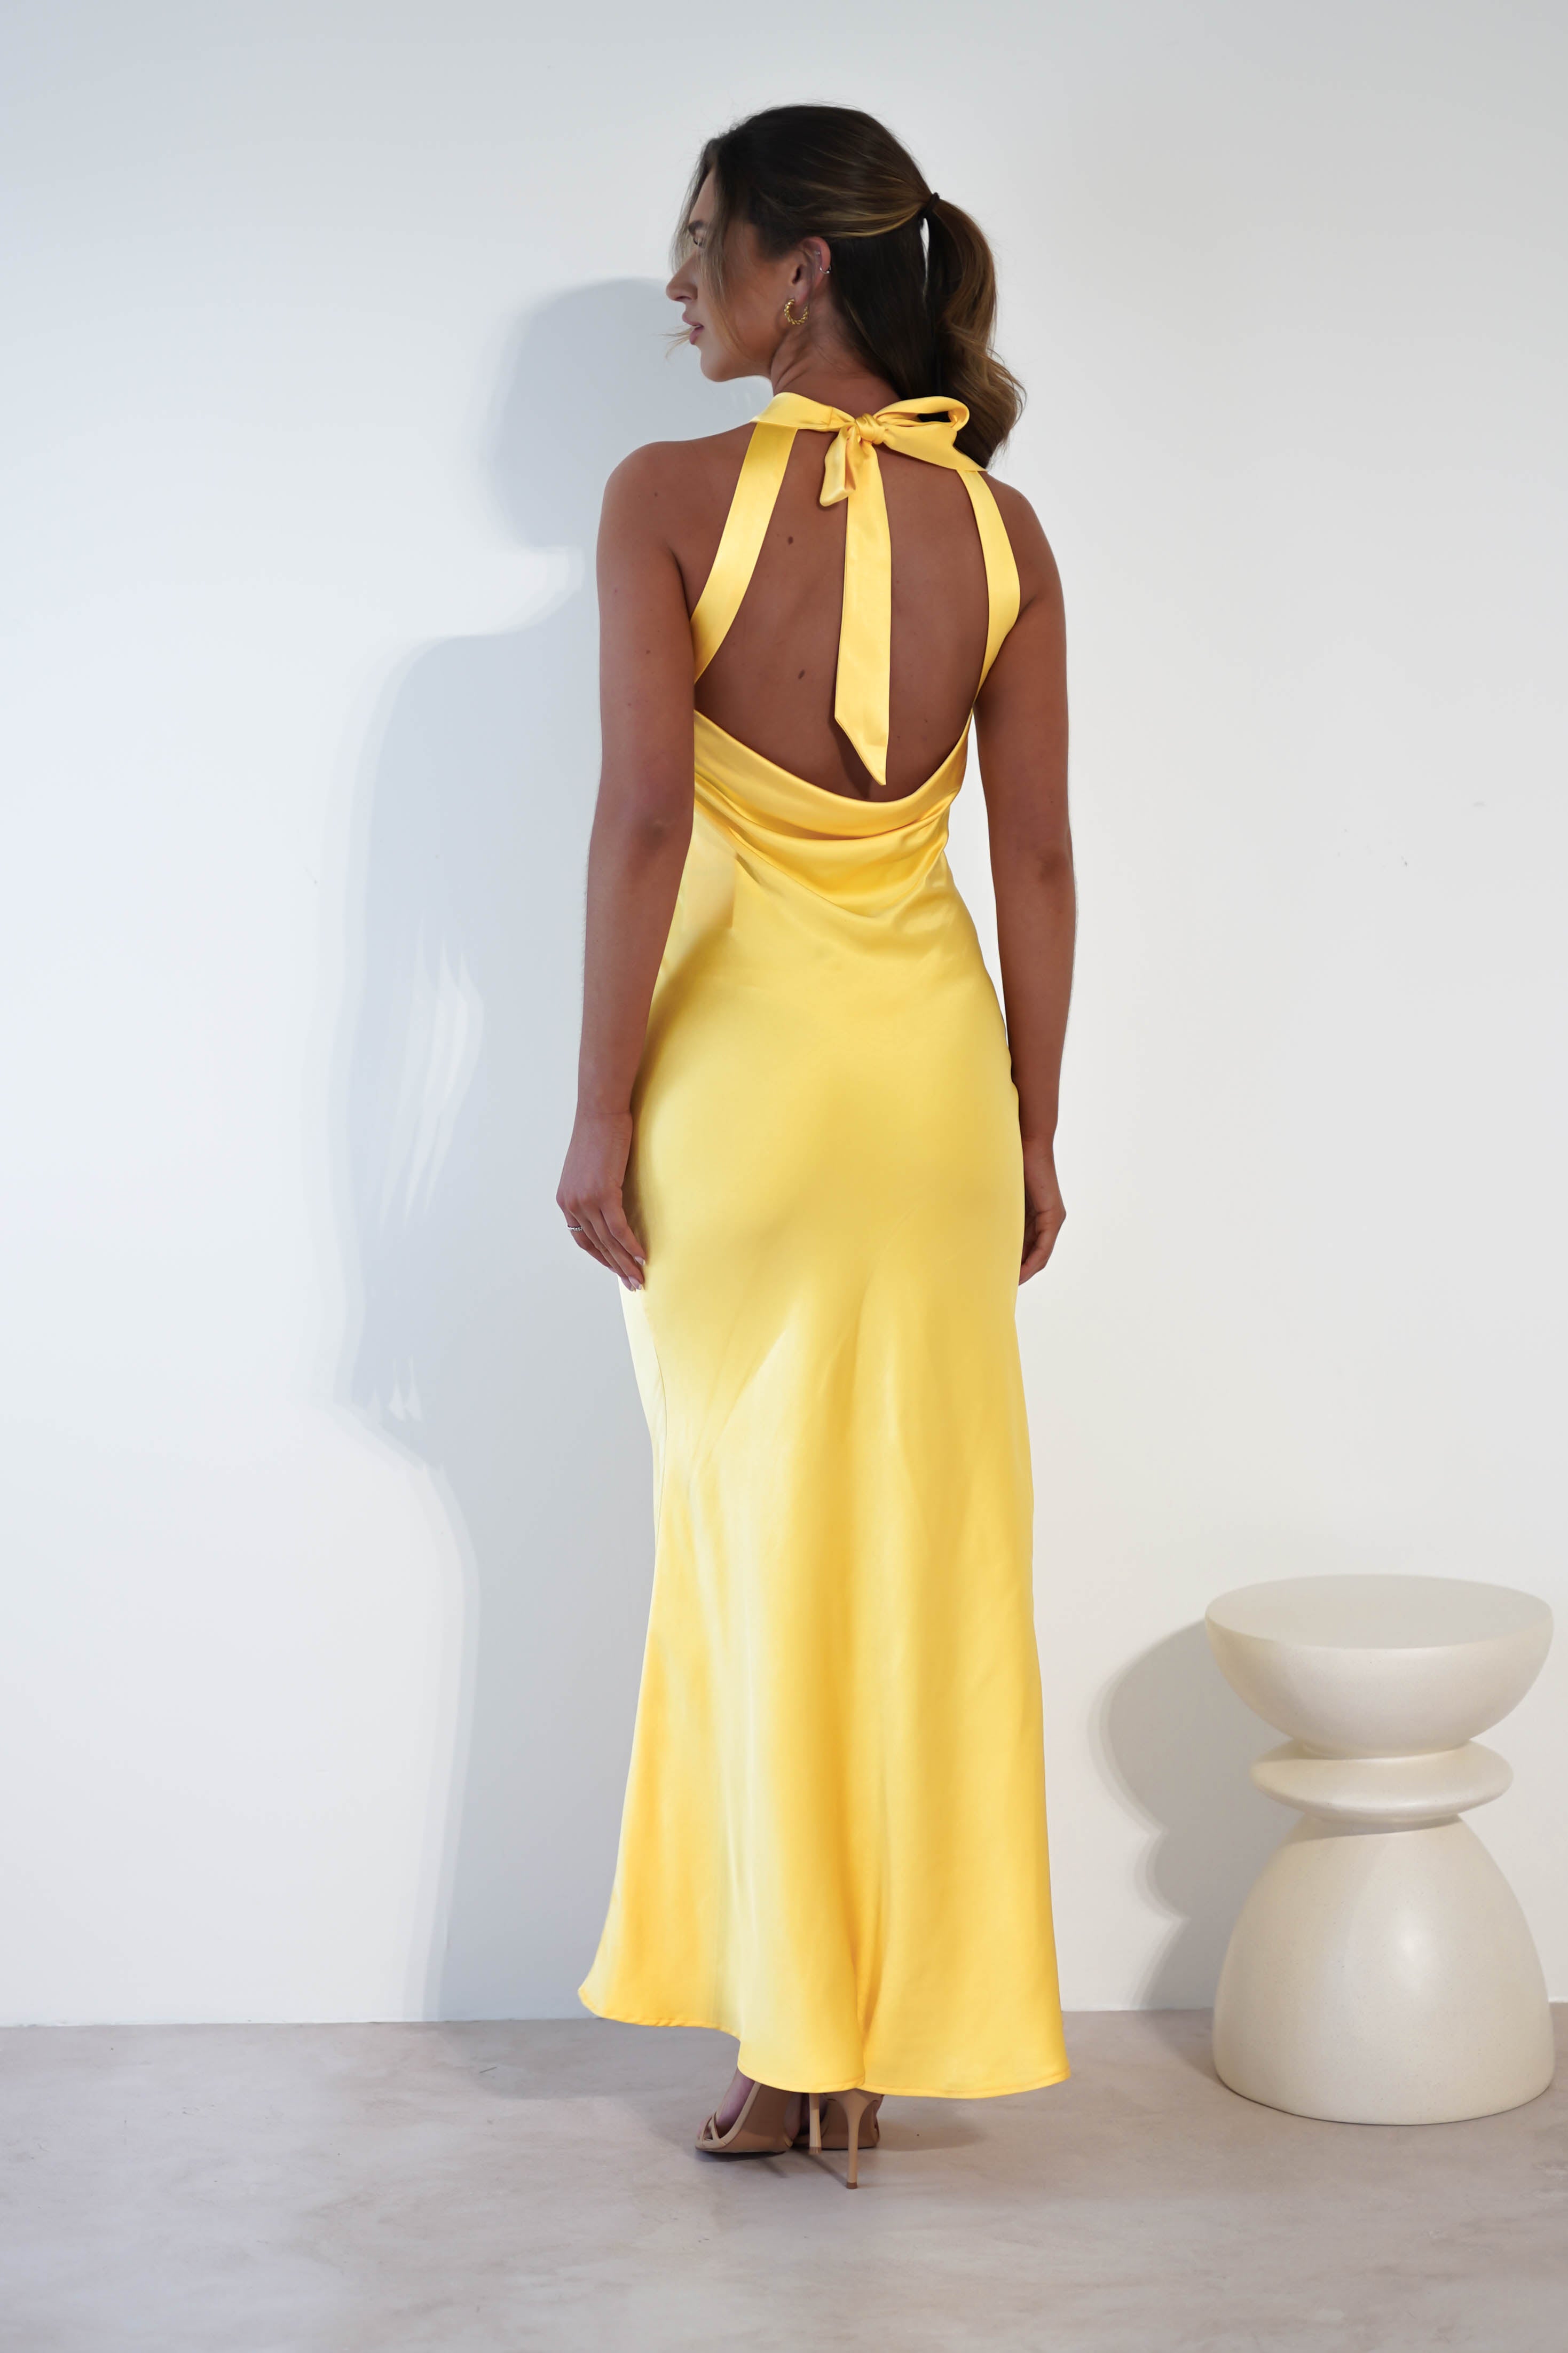 40 Size Dresses - Buy Women Stylish XXL Dresses Online